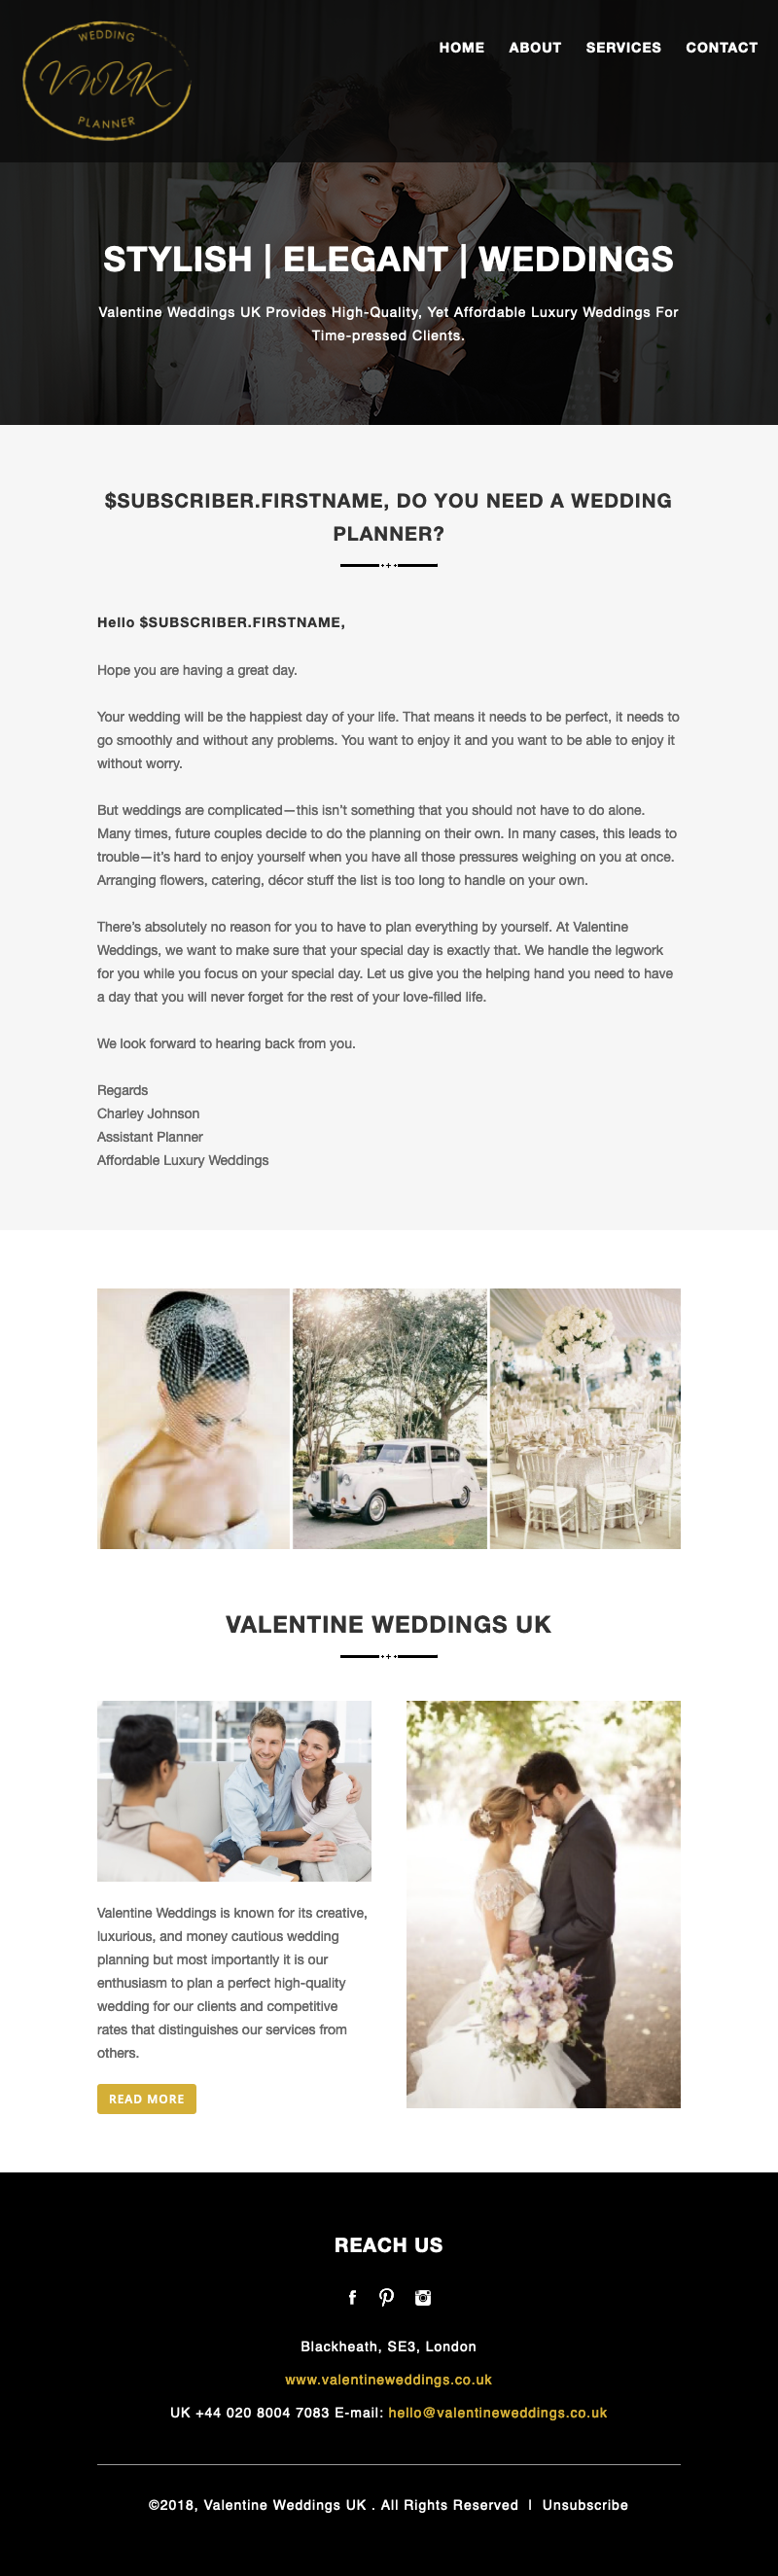 Valentine Weddings - Email Newsletter